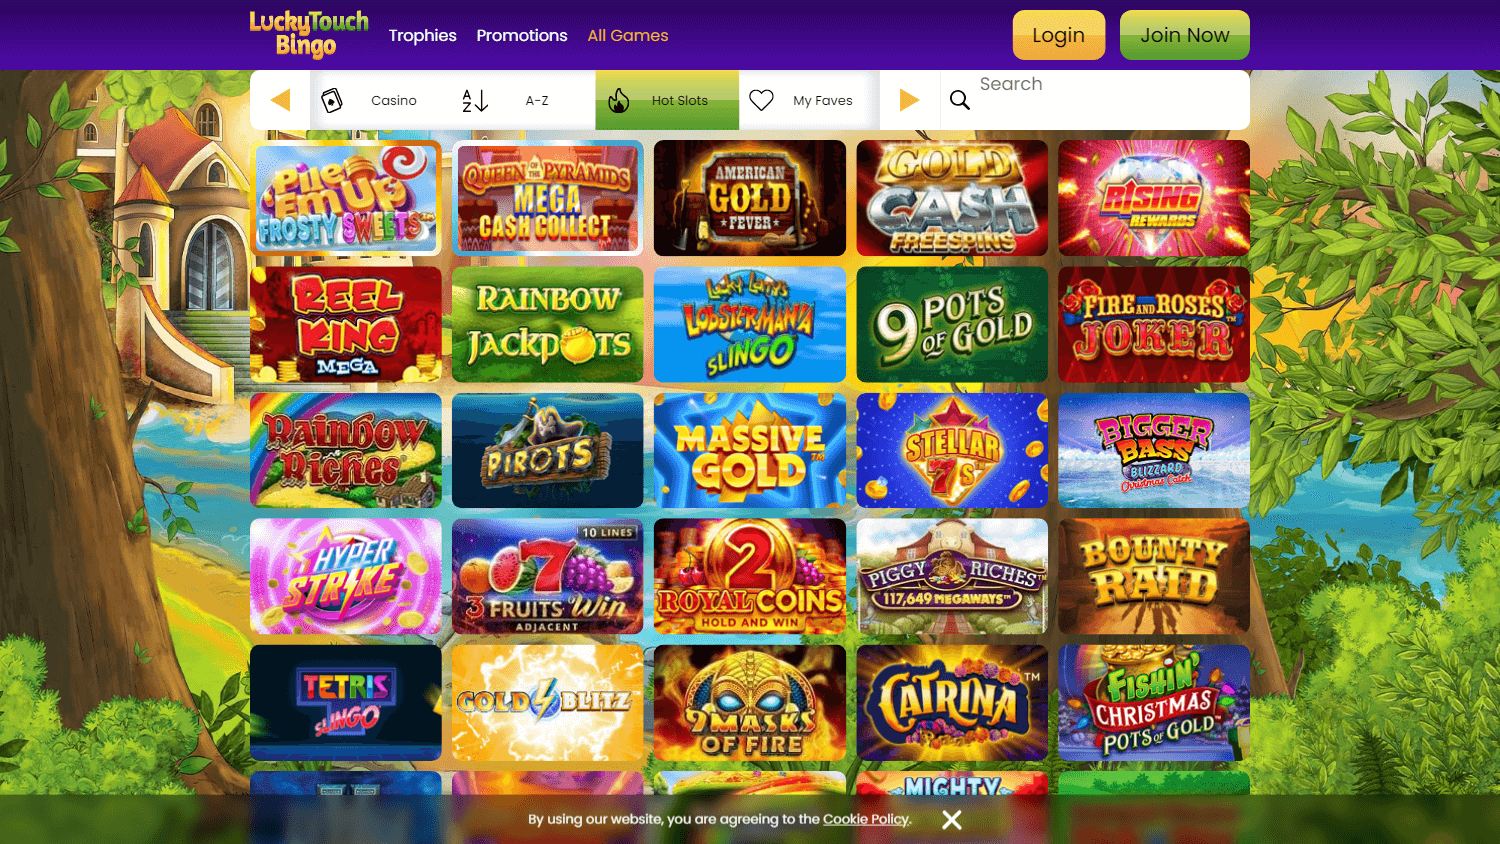 lucky_touch_bingo_casino_game_gallery_desktop